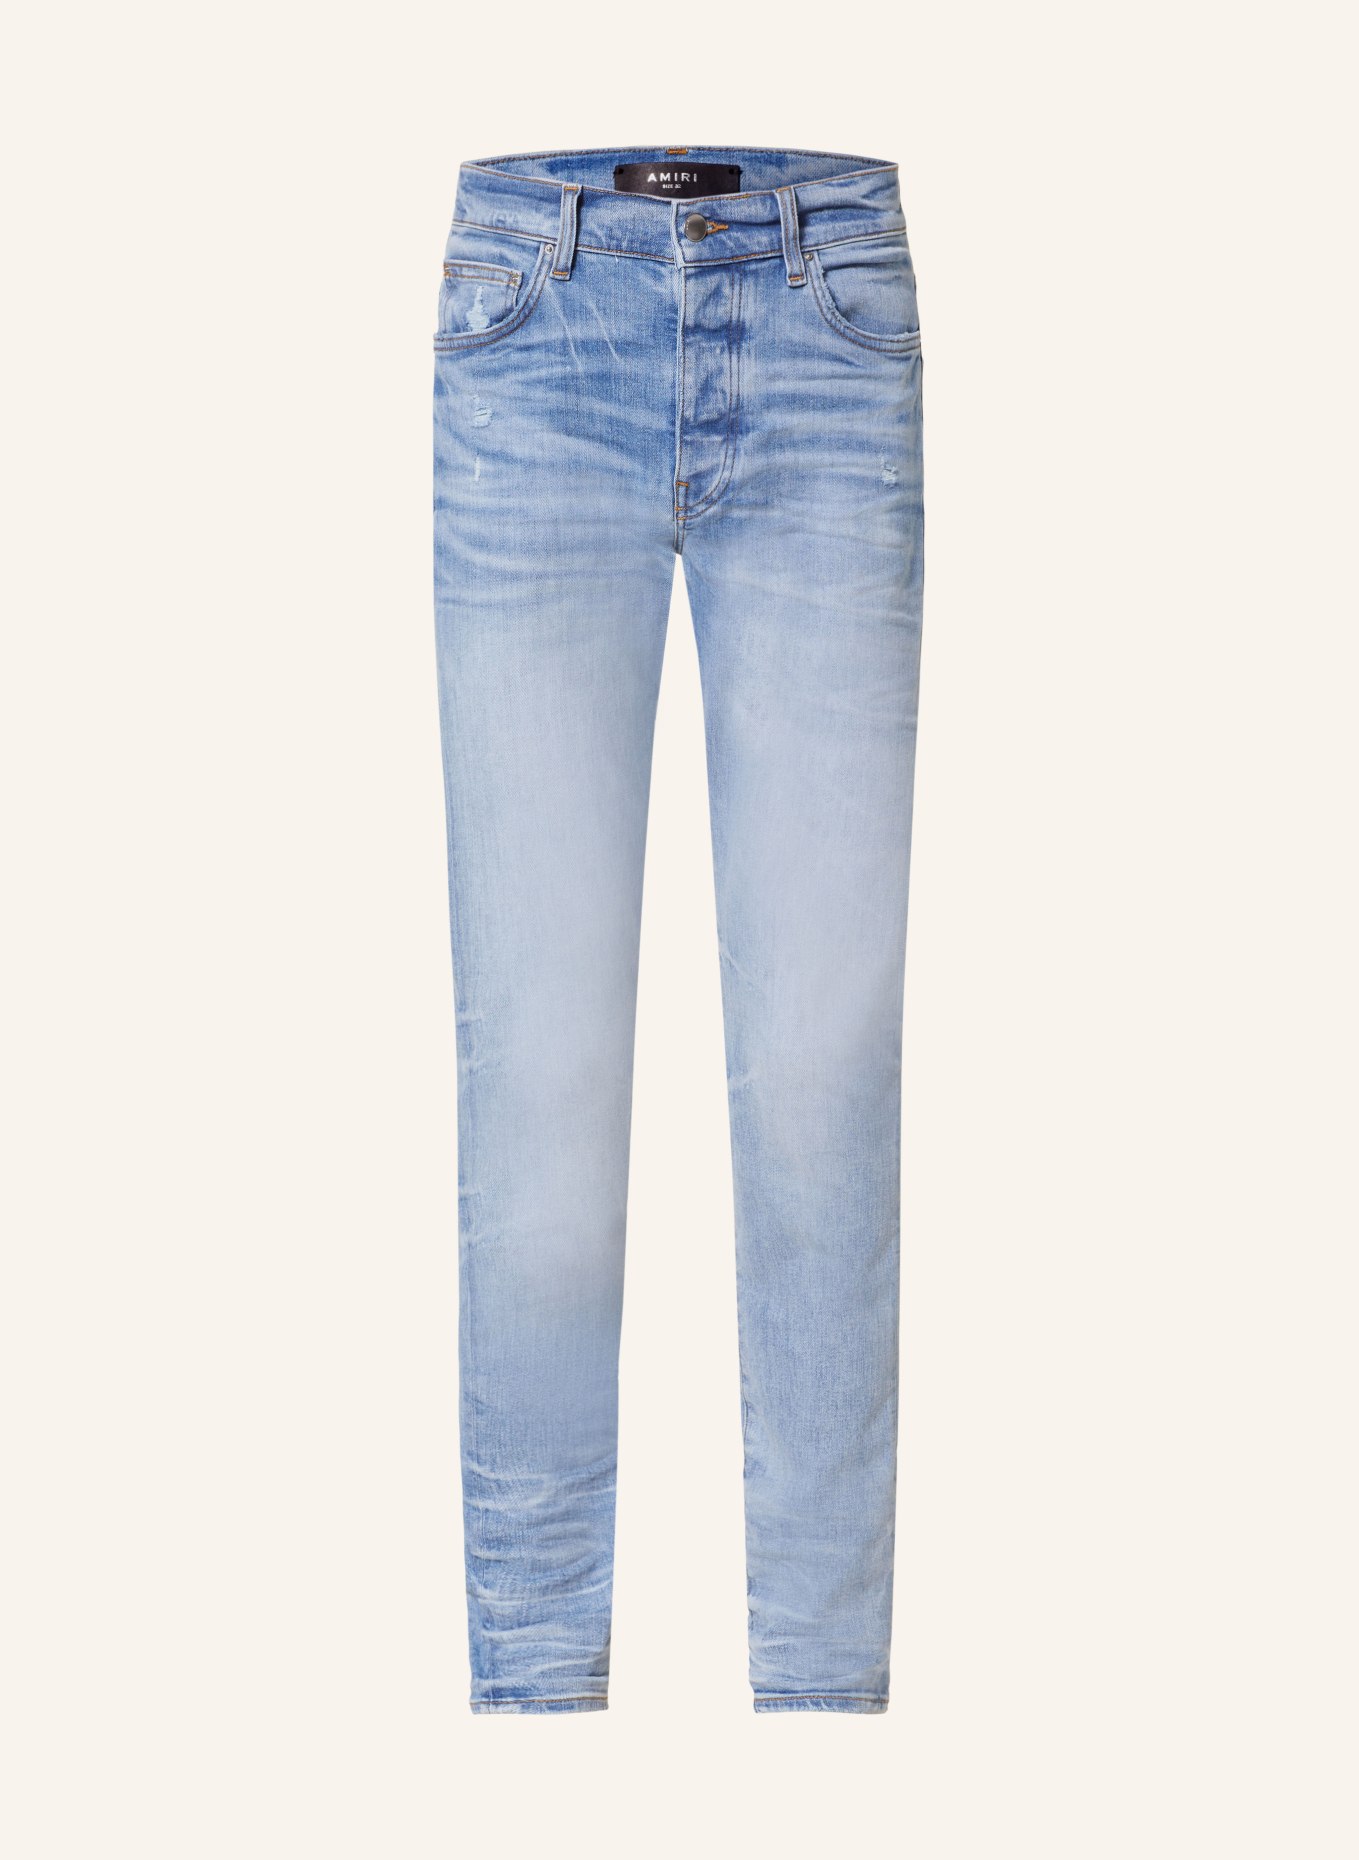 AMIRI Jeans STACK Extra Slim Fit, Farbe: 426 PERFECT INDIGO (Bild 1)